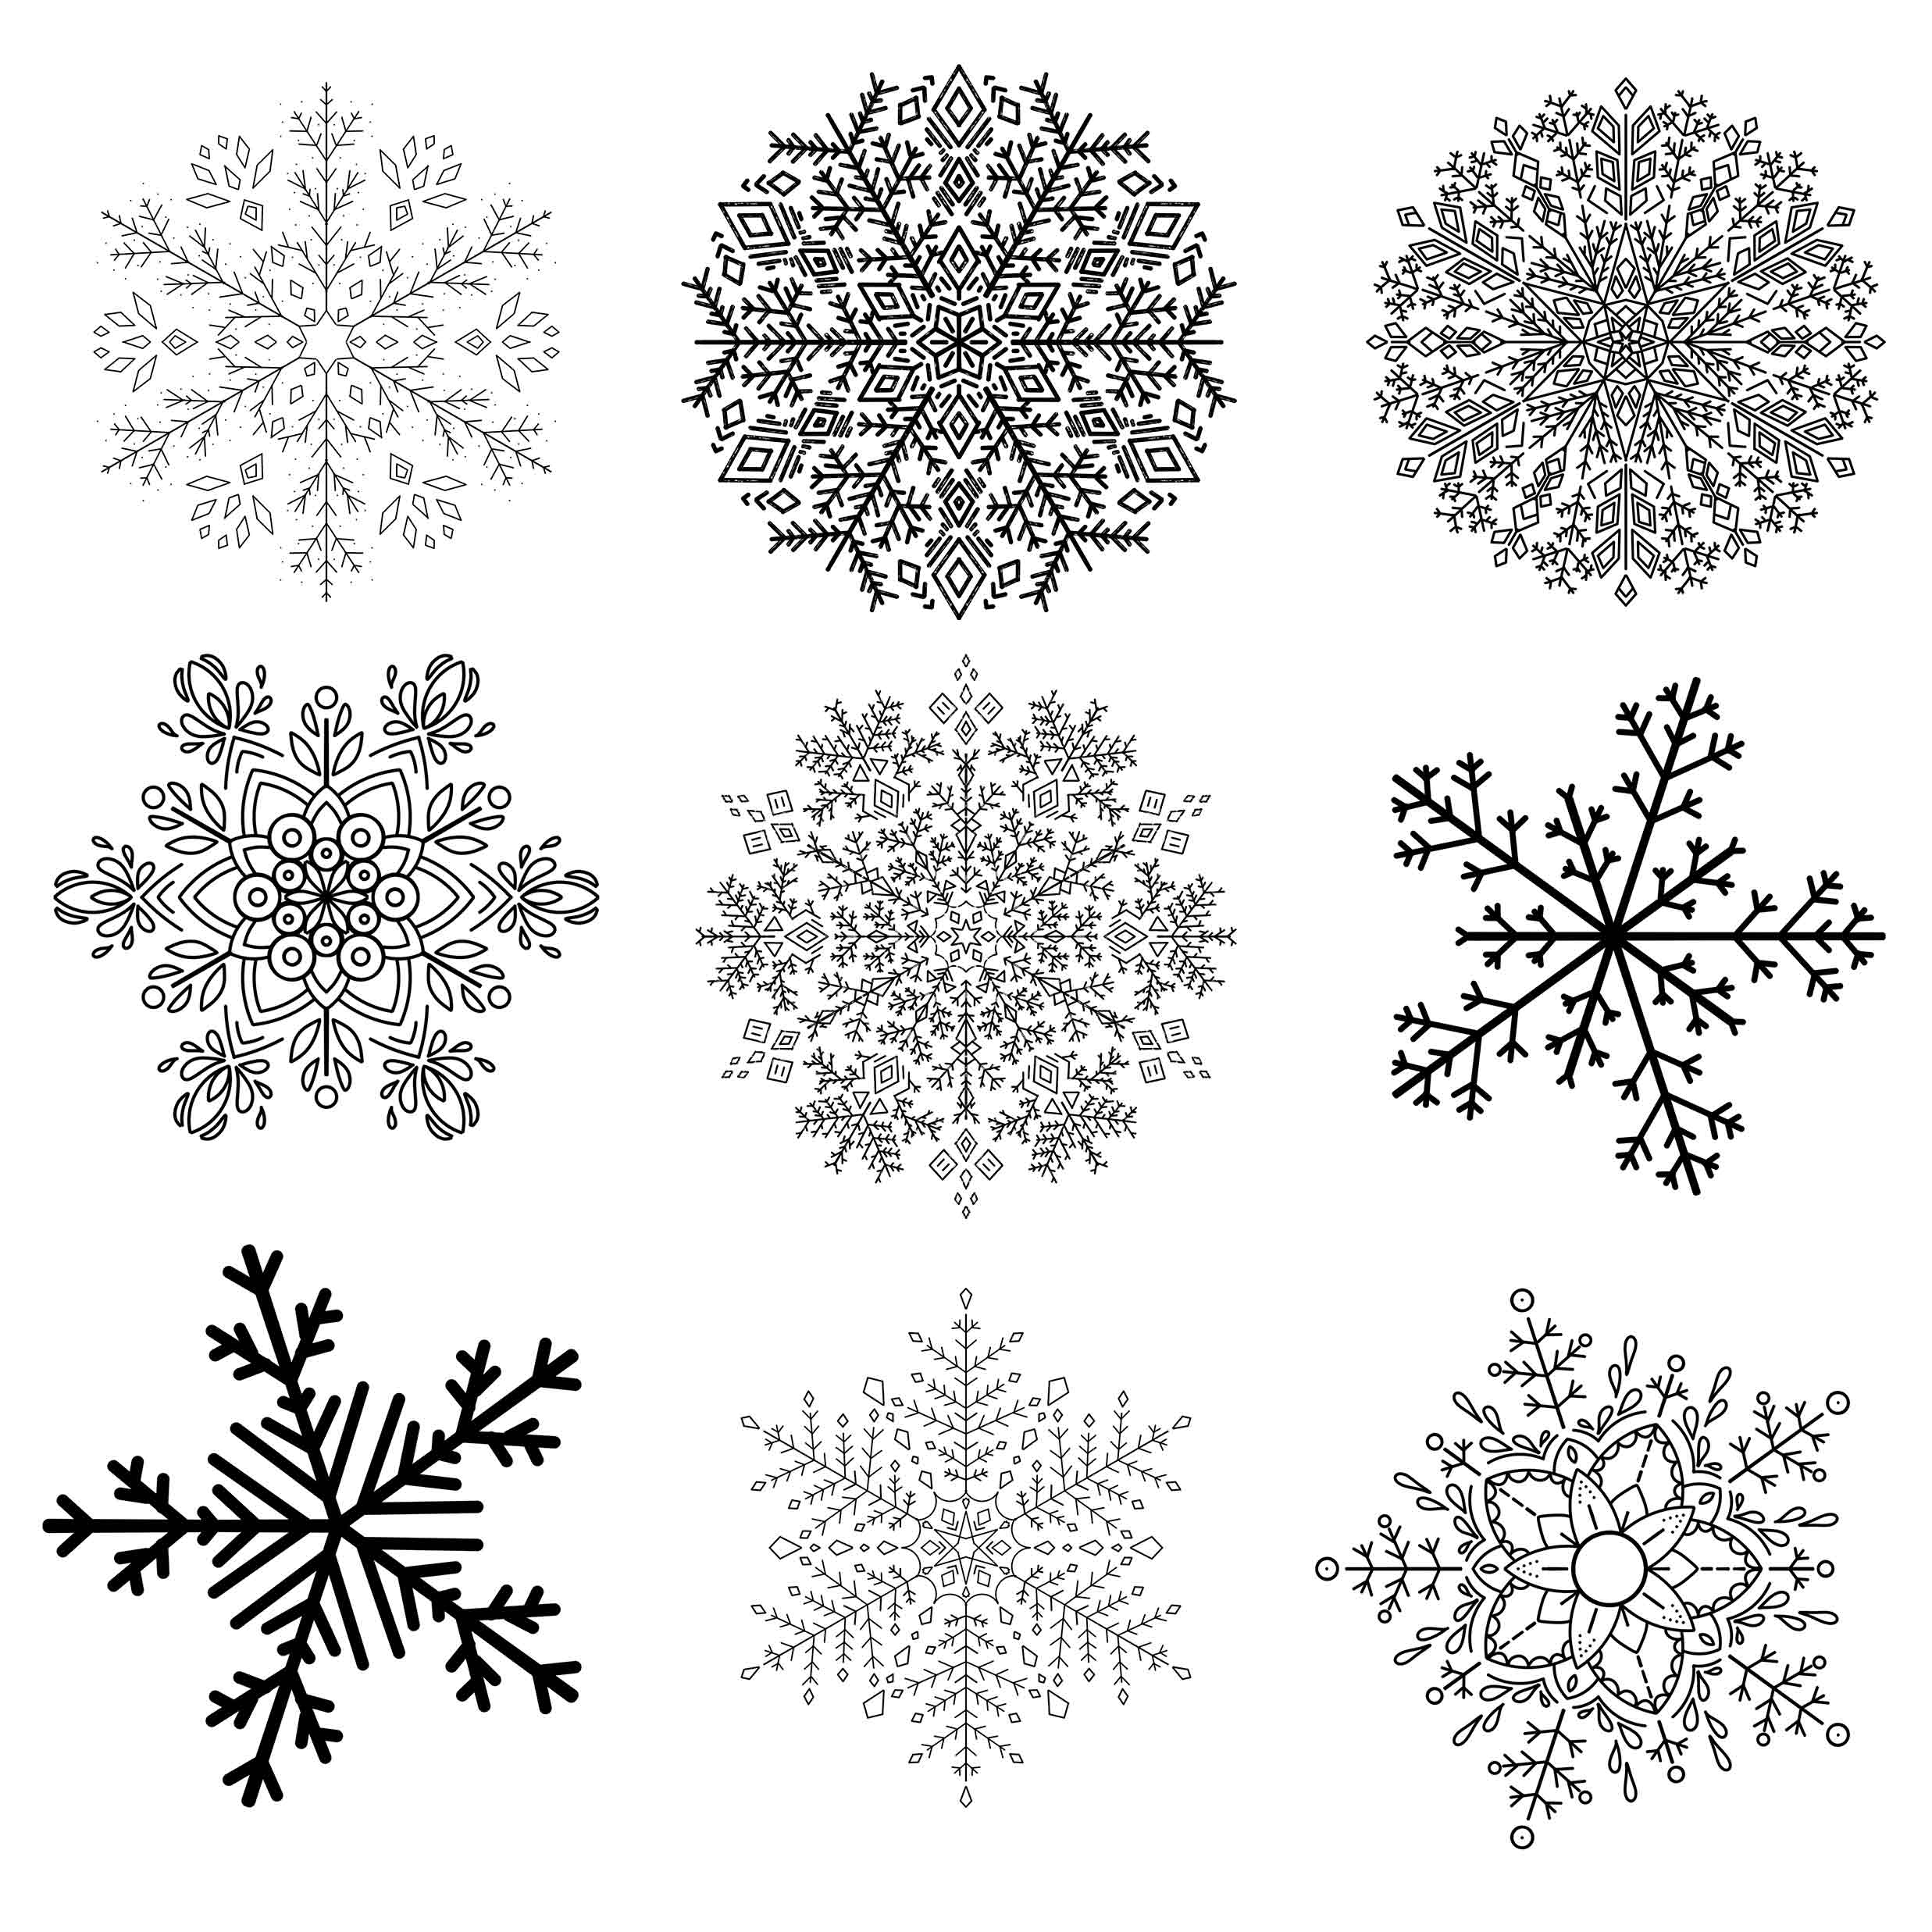 Big diversity of snowflake graphics.